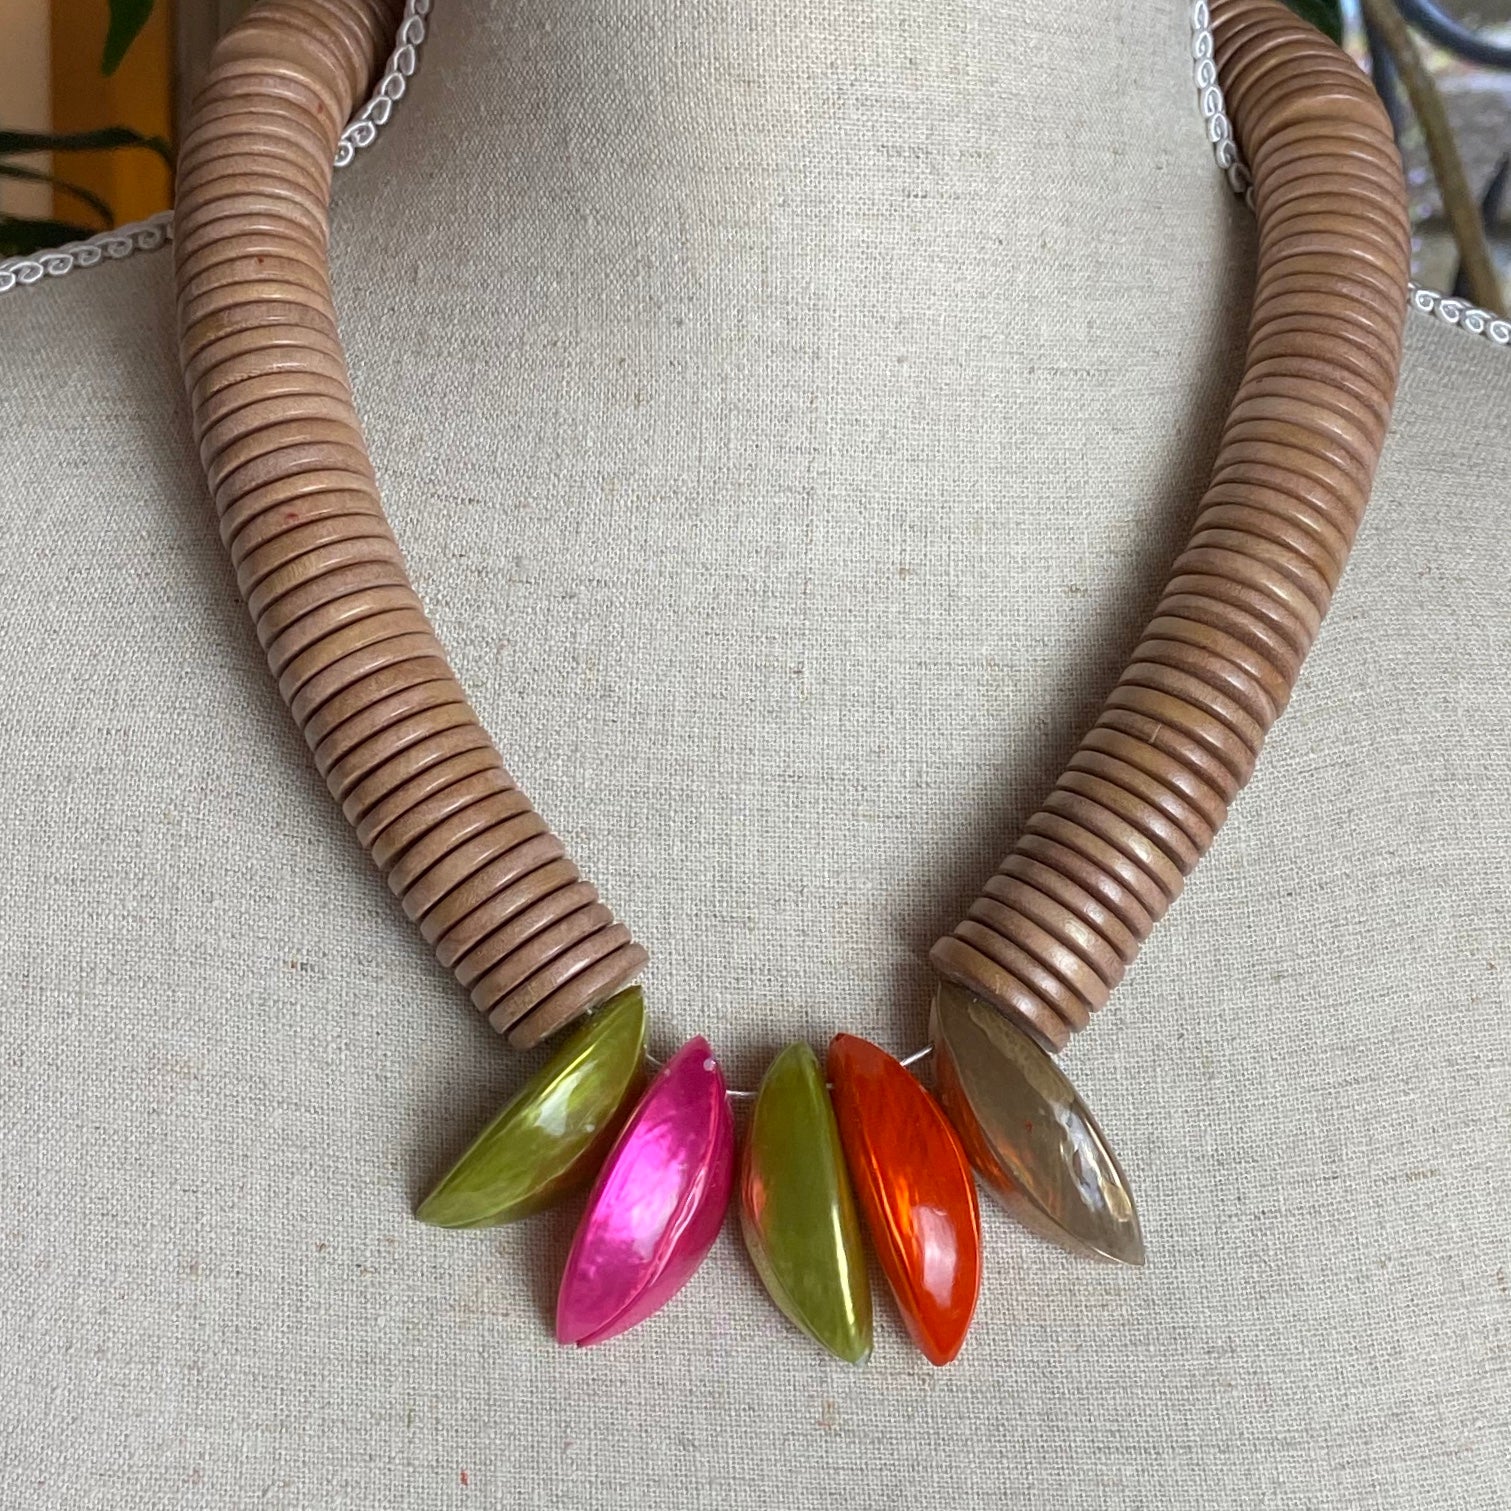 Troca Shell - Pink/ Orange/ Green Necklace - The Nancy Smillie Shop - Art, Jewellery & Designer Gifts Glasgow